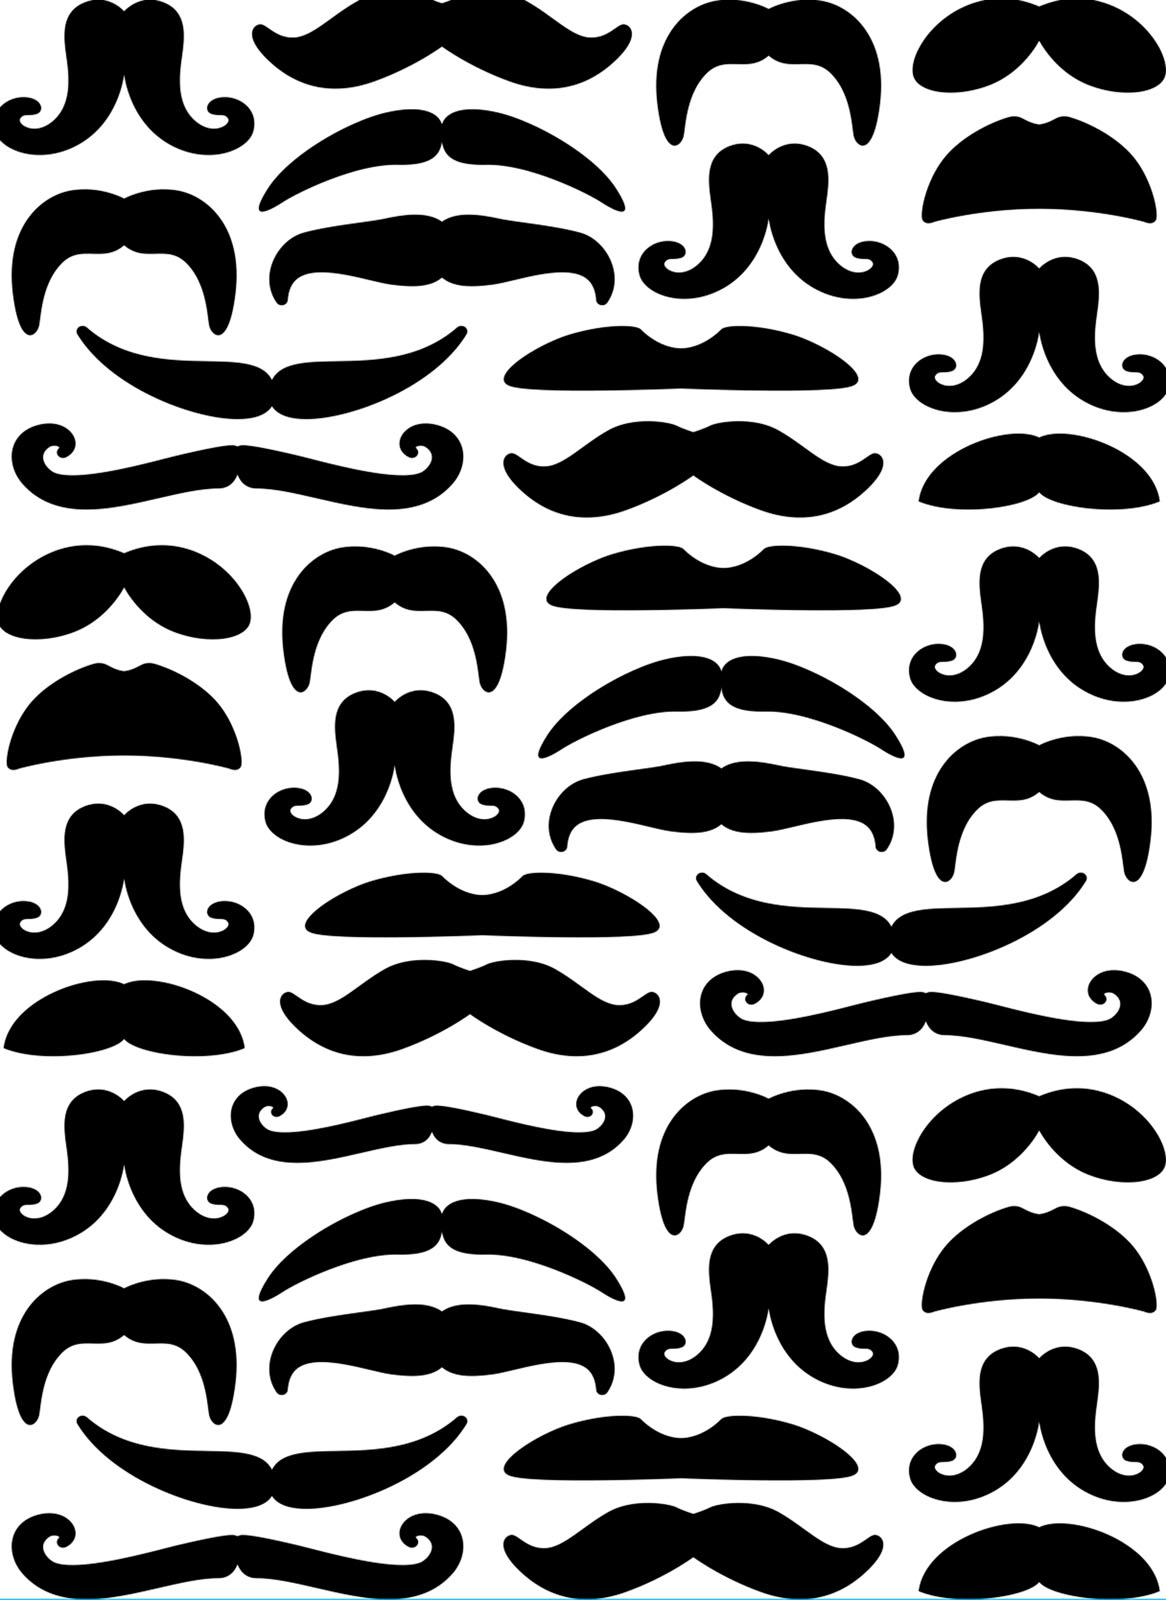 Darice • Embossing folder mustaches